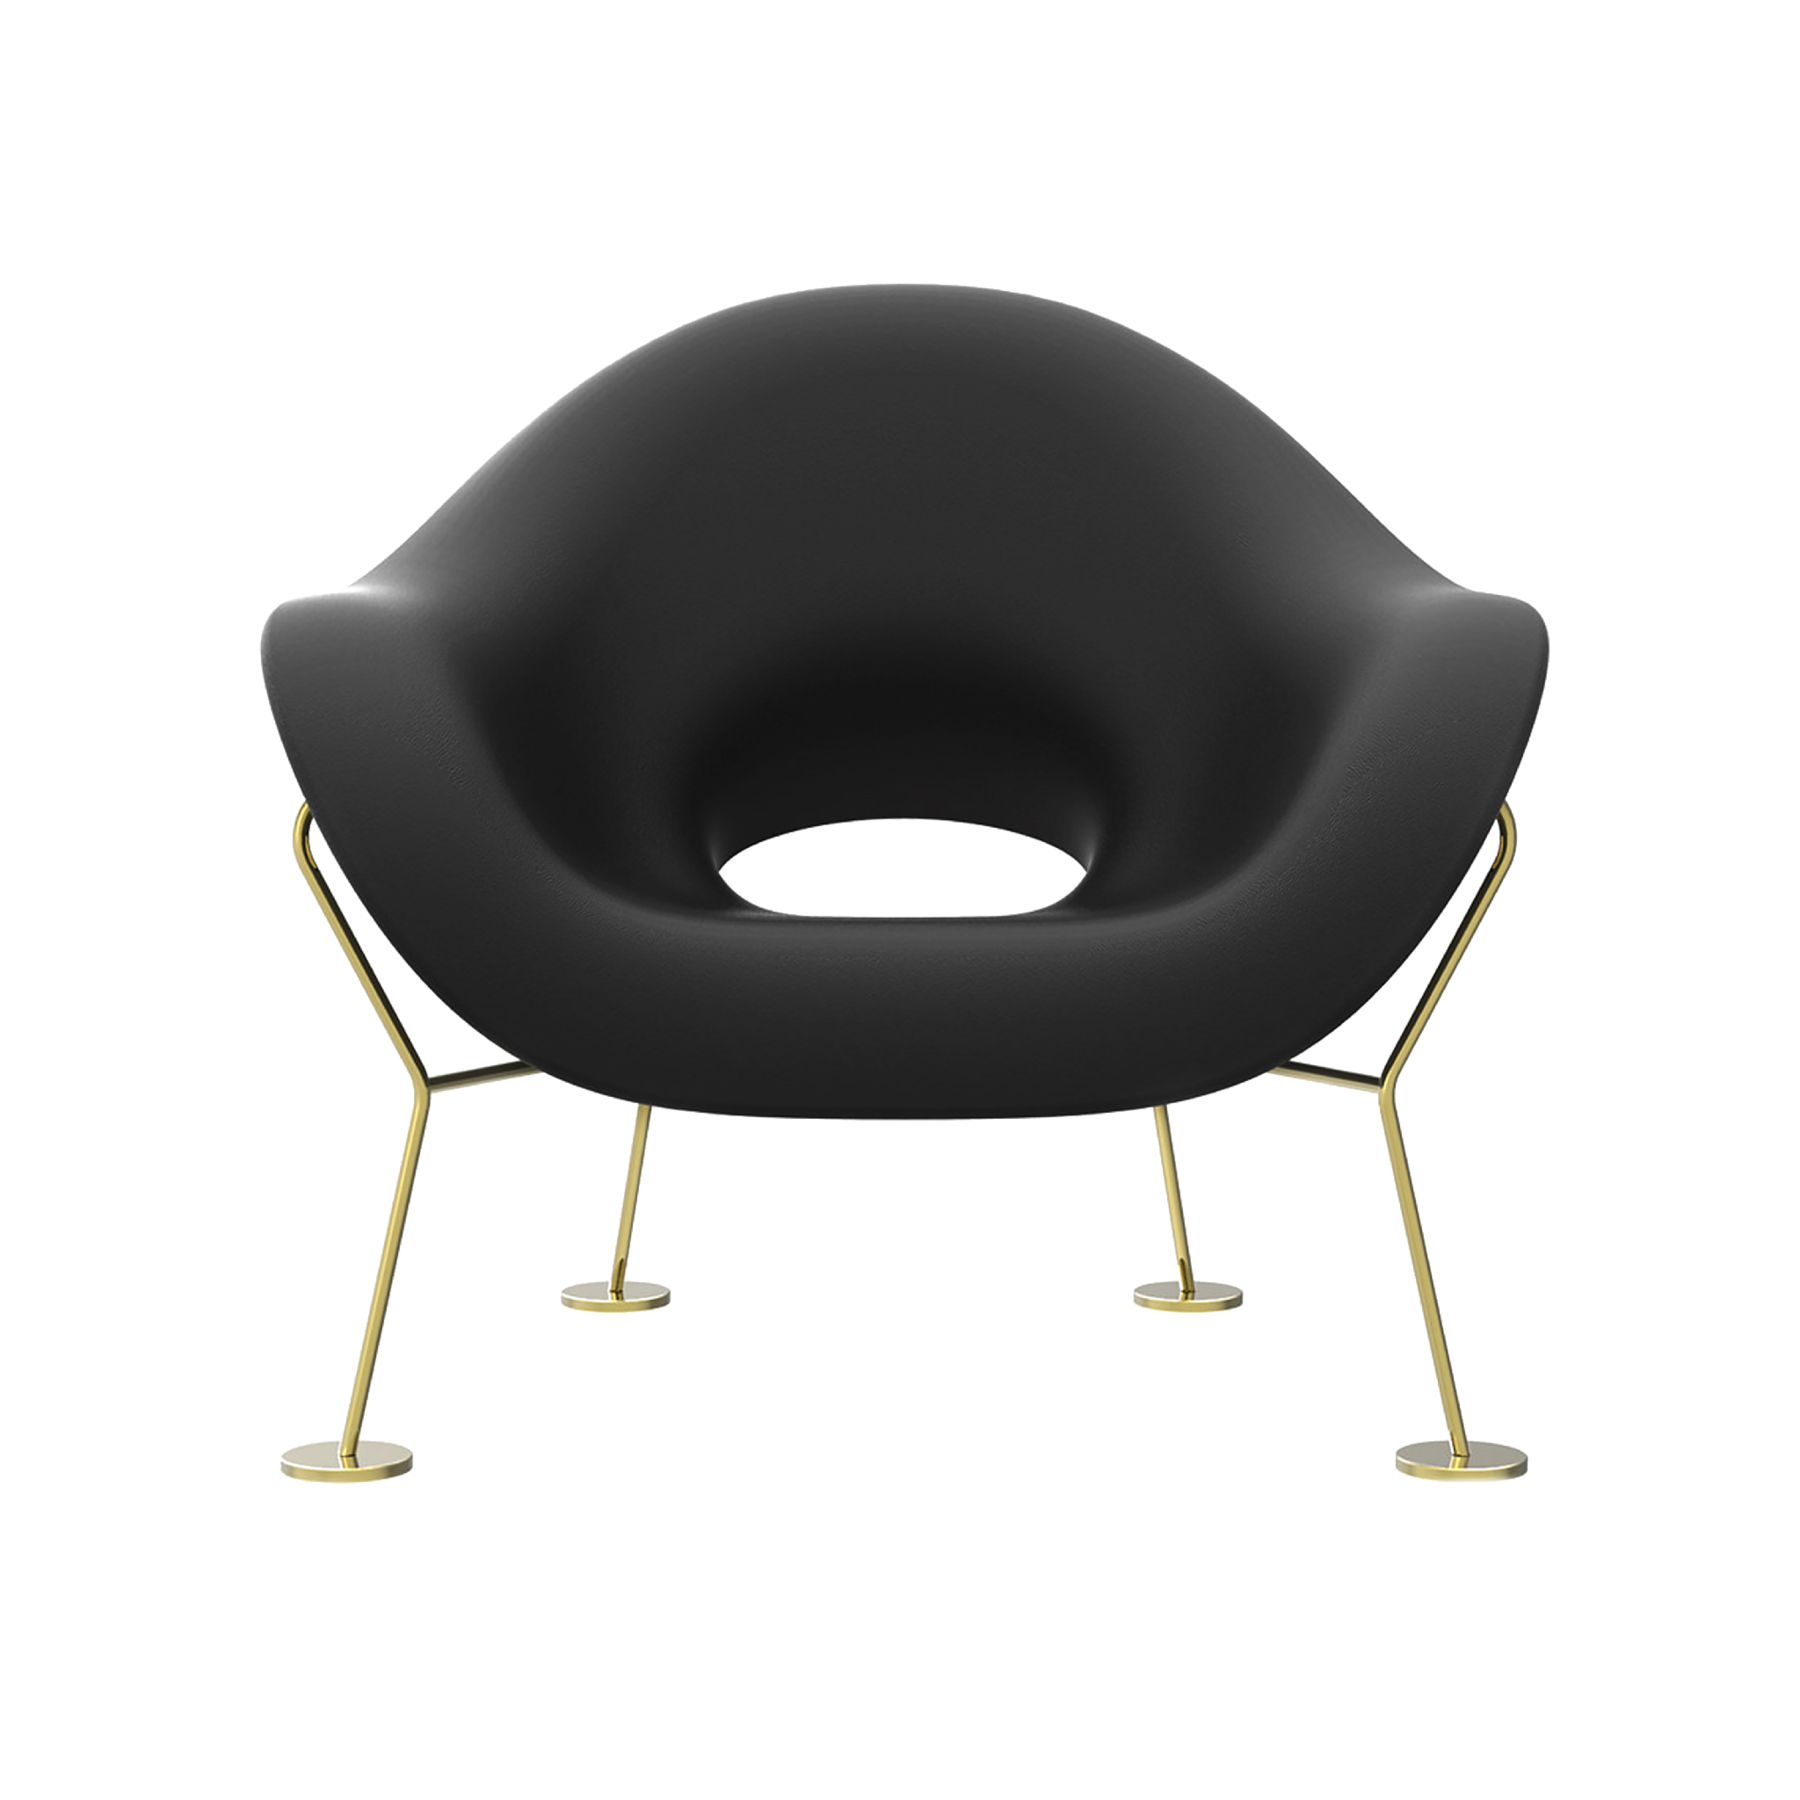 brass structure - black seat